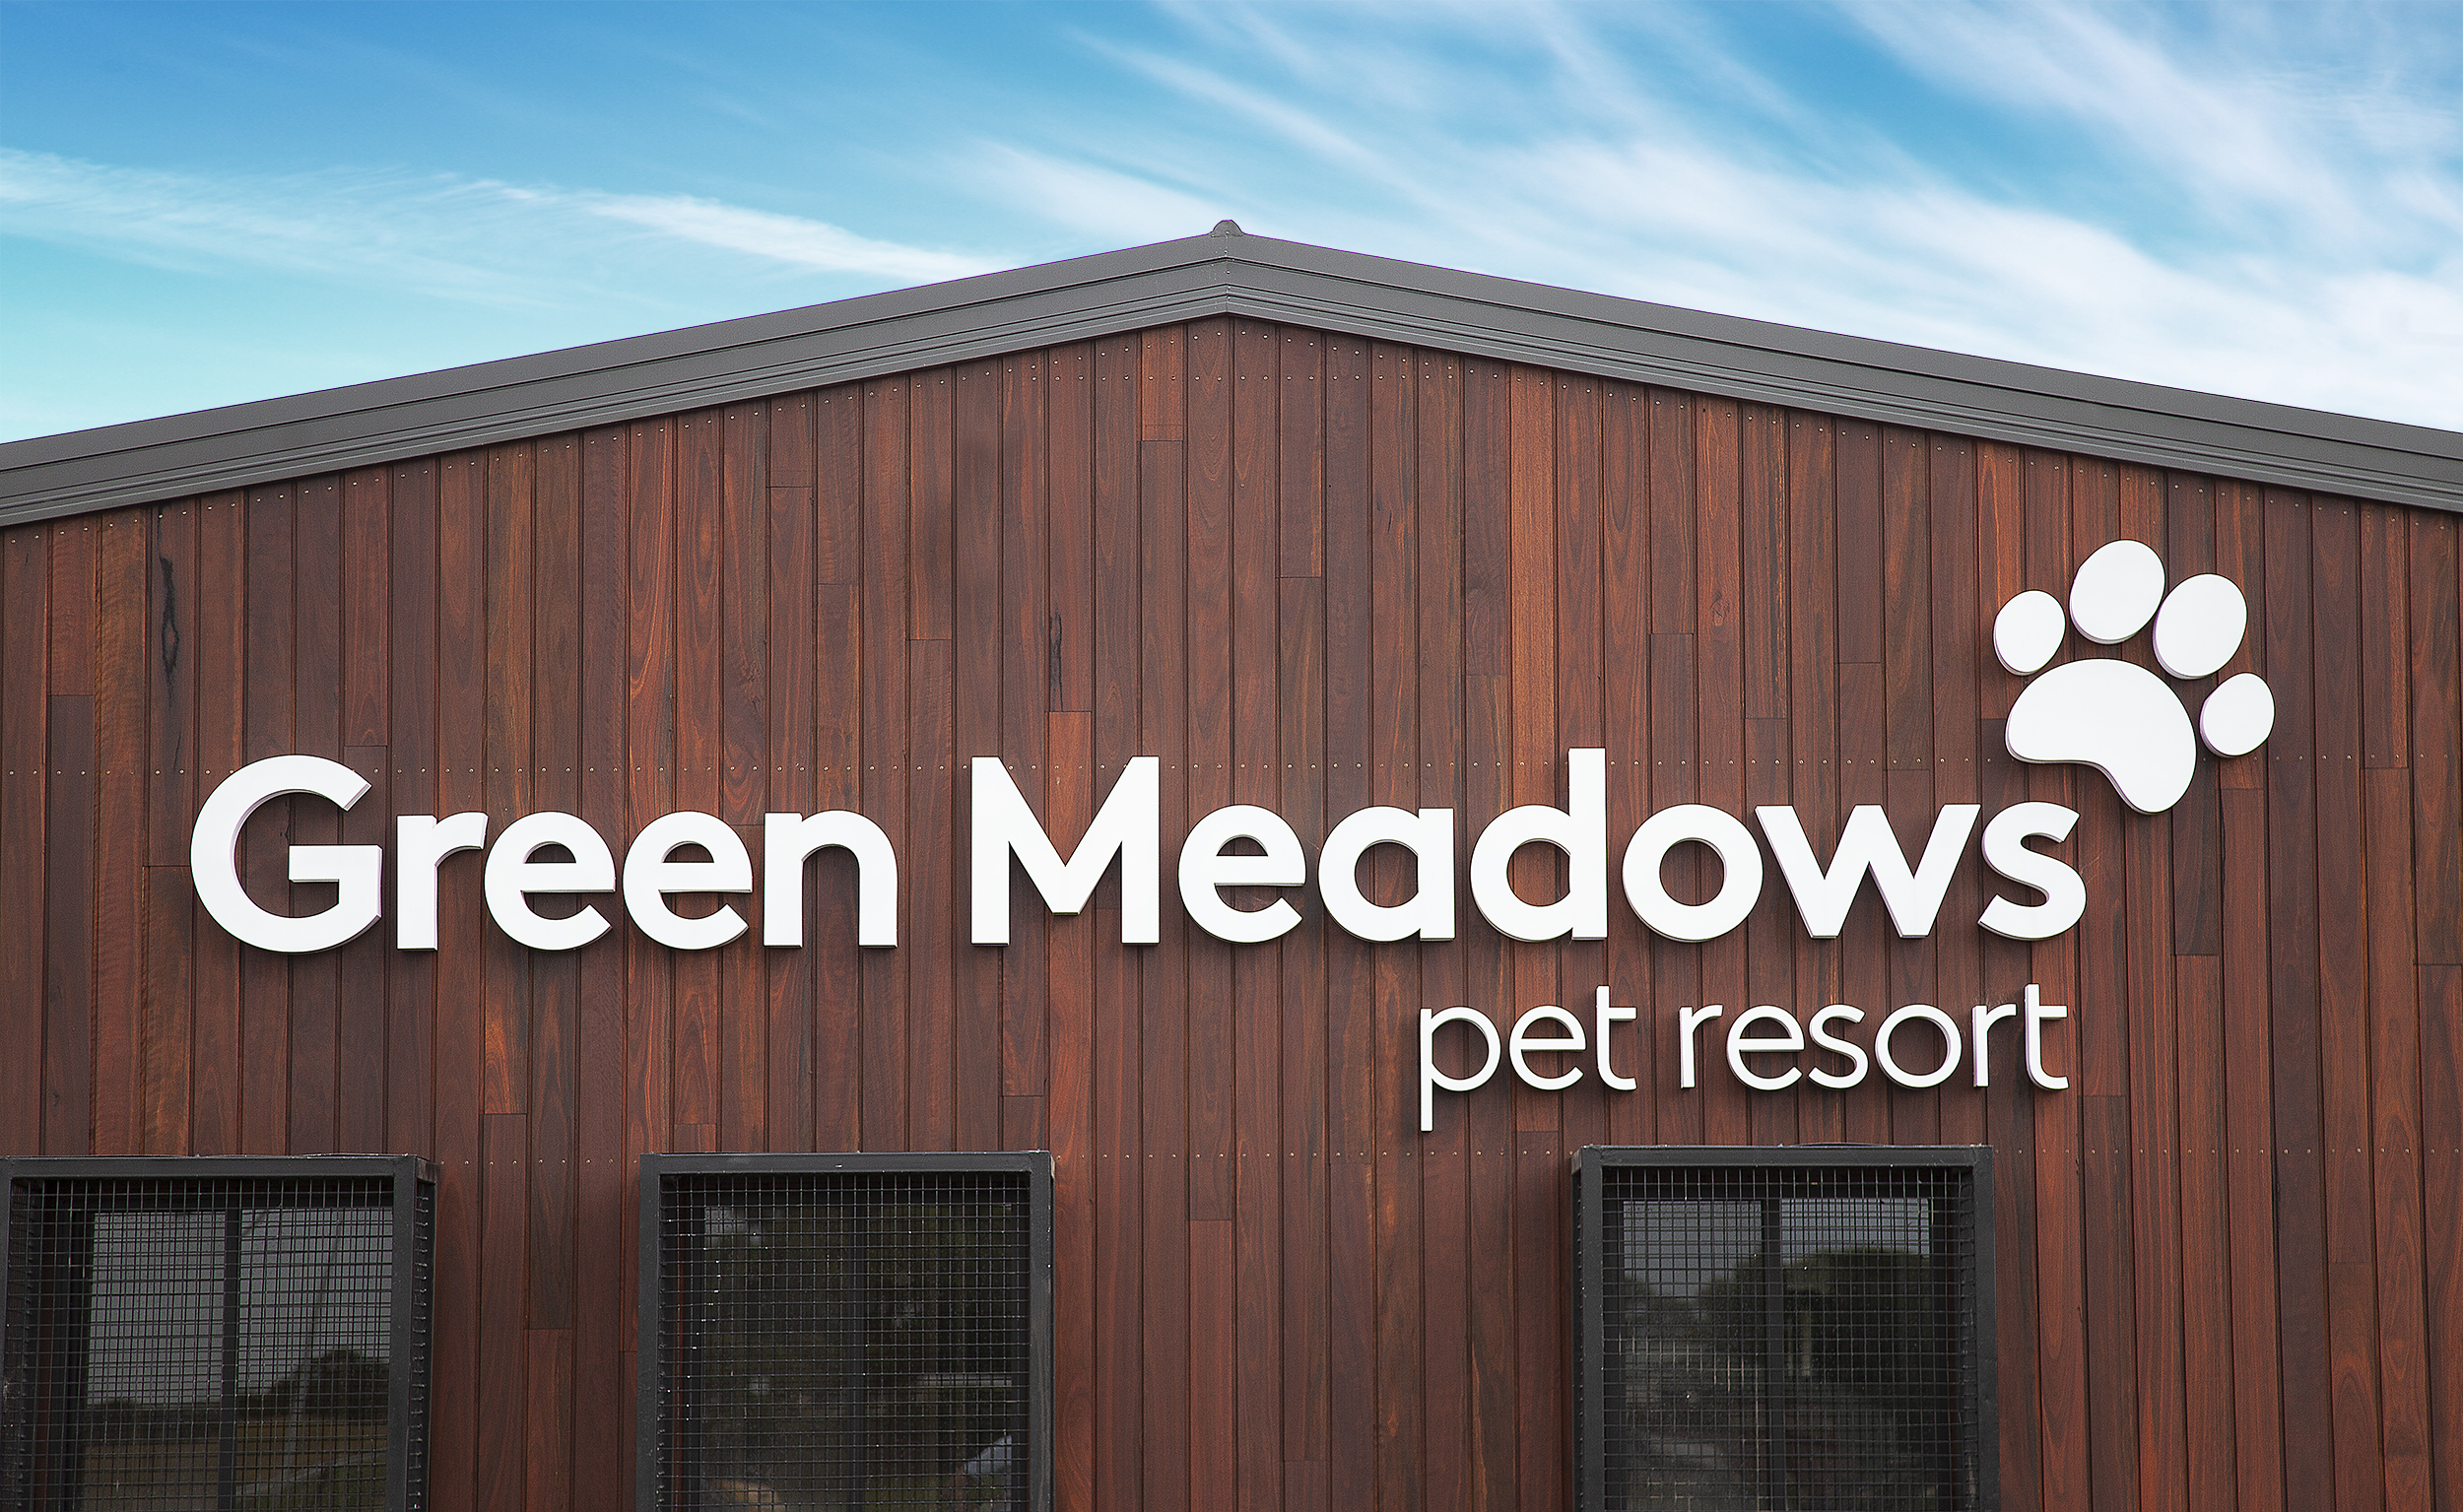 Green Meadows Pet Resort Signage